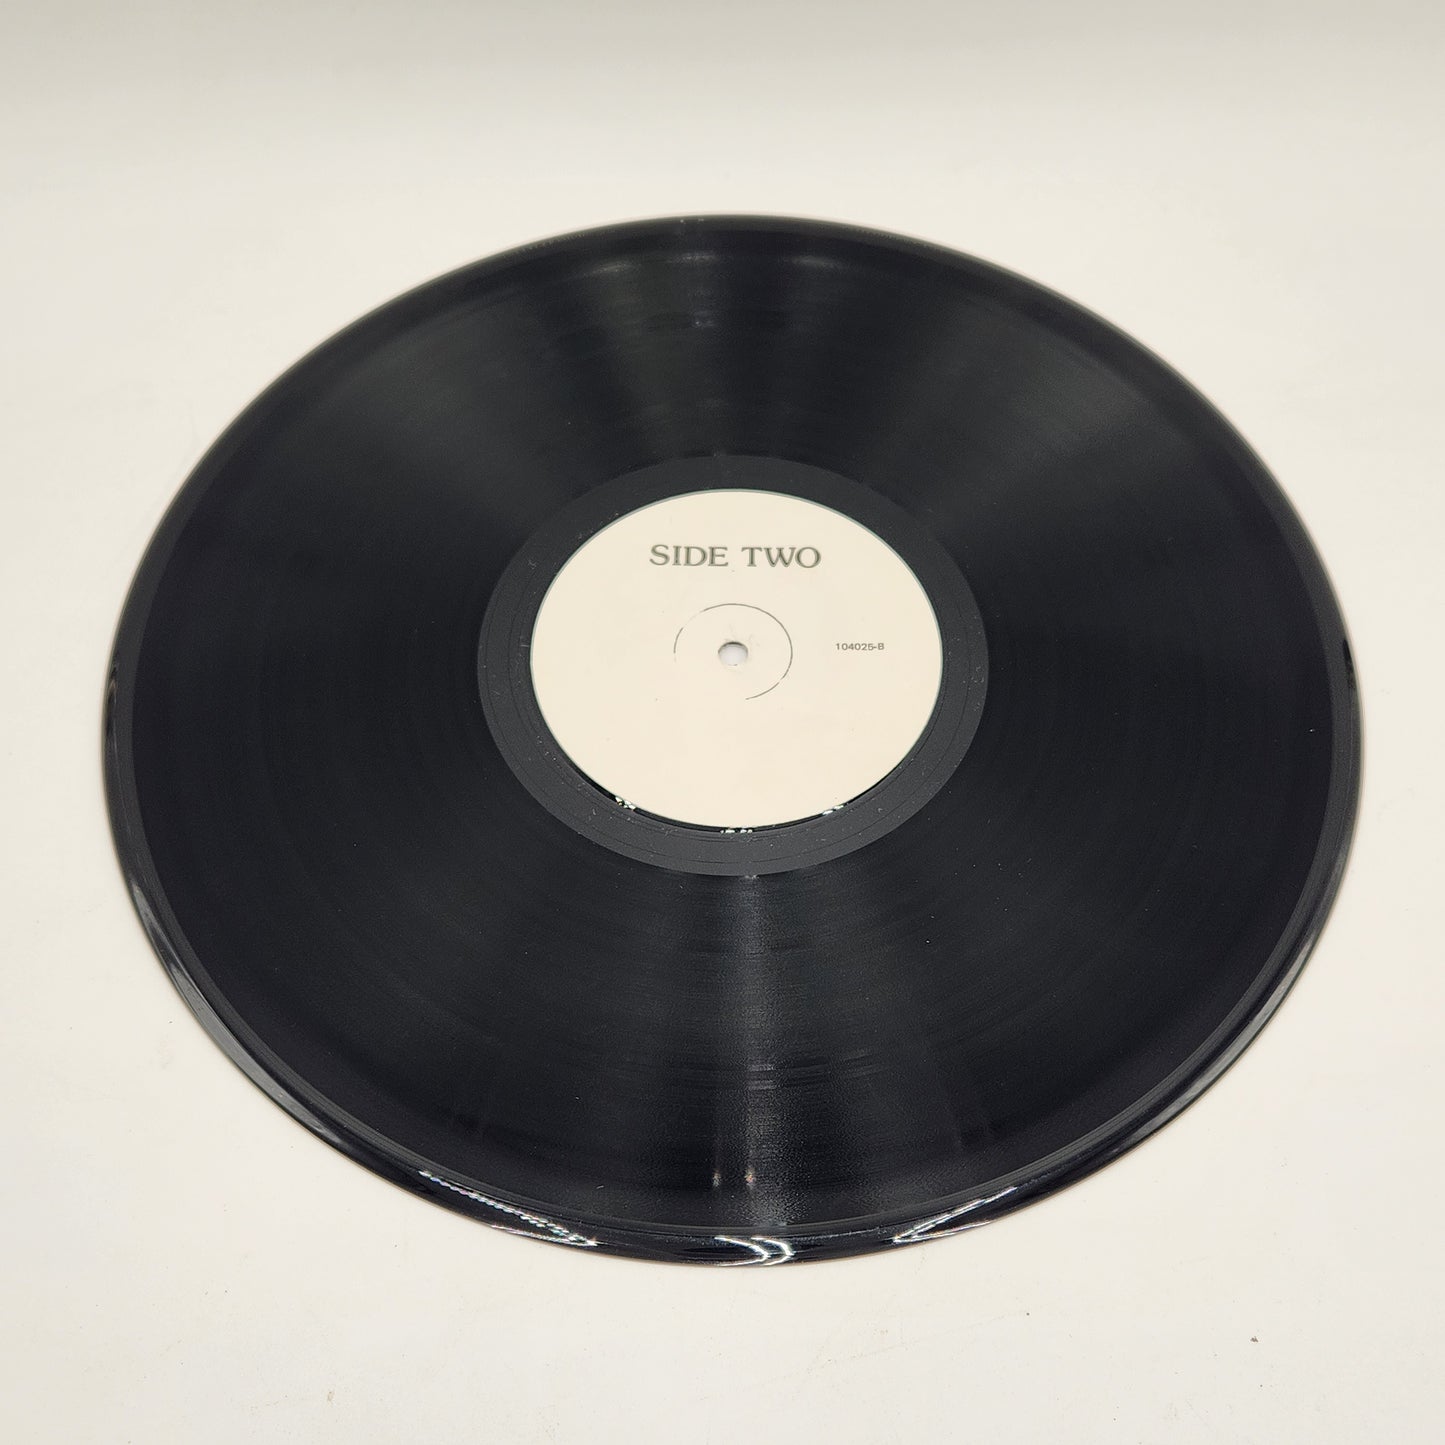 Velvet Underground "1966" Unofficial Art Rock Avantgarde Record Album